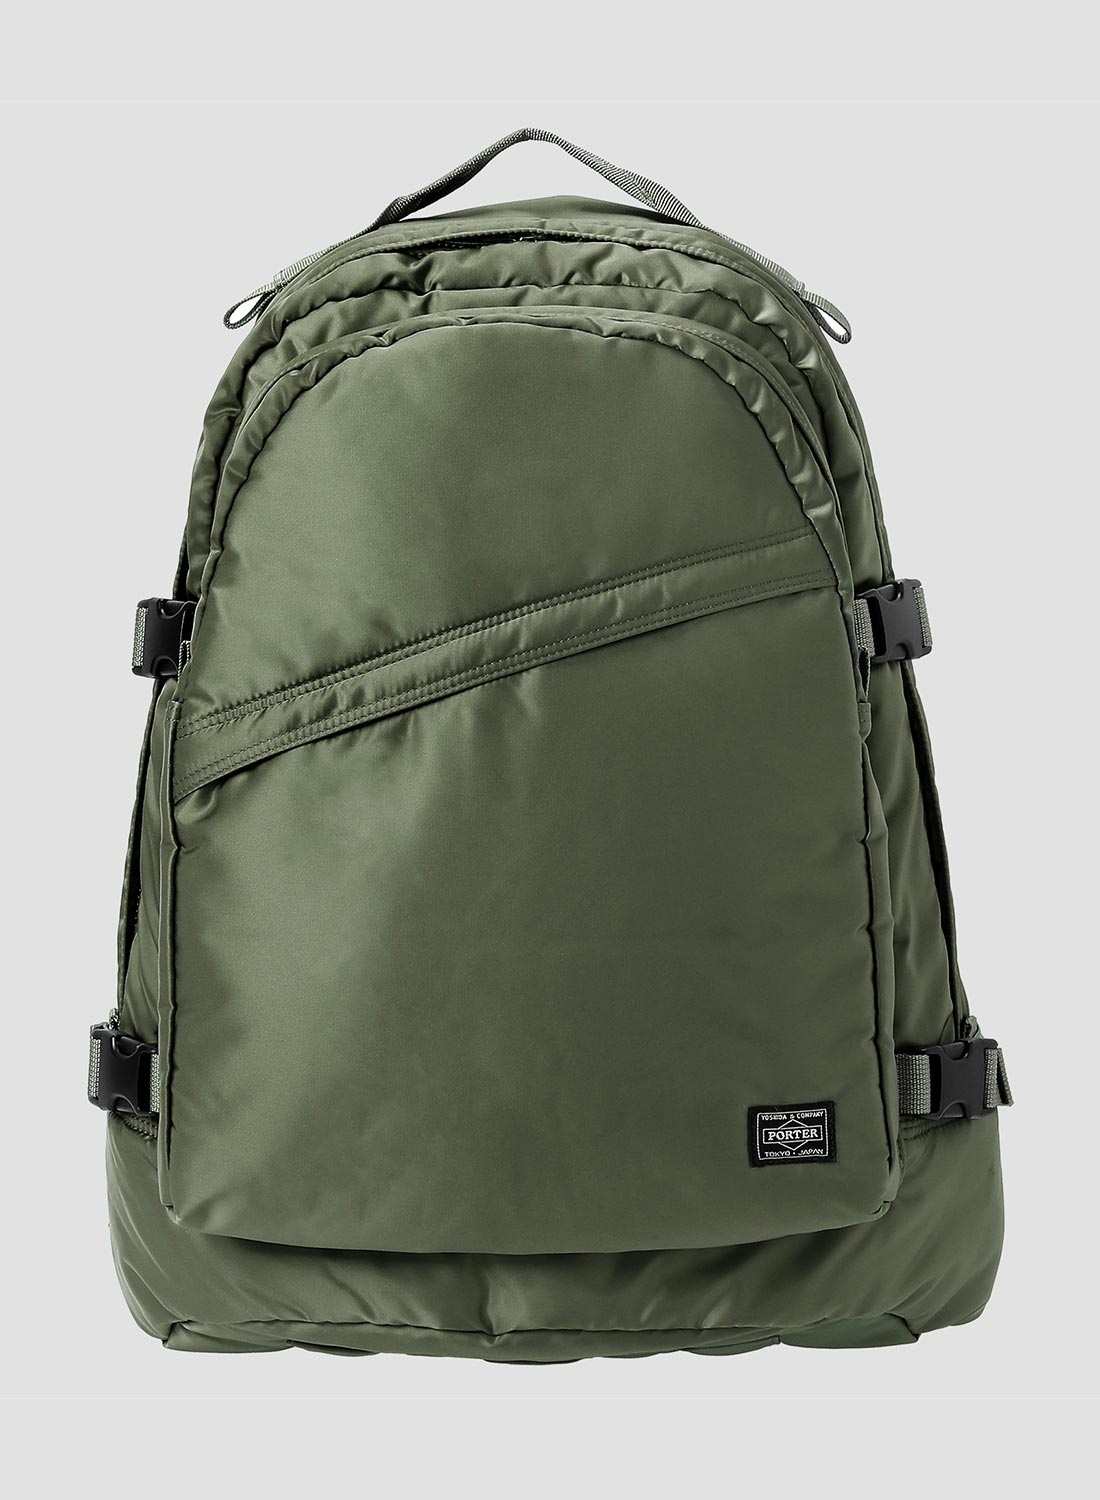 Porter-Yoshida & Co Tanker Day Backpack in Sage Green - 1